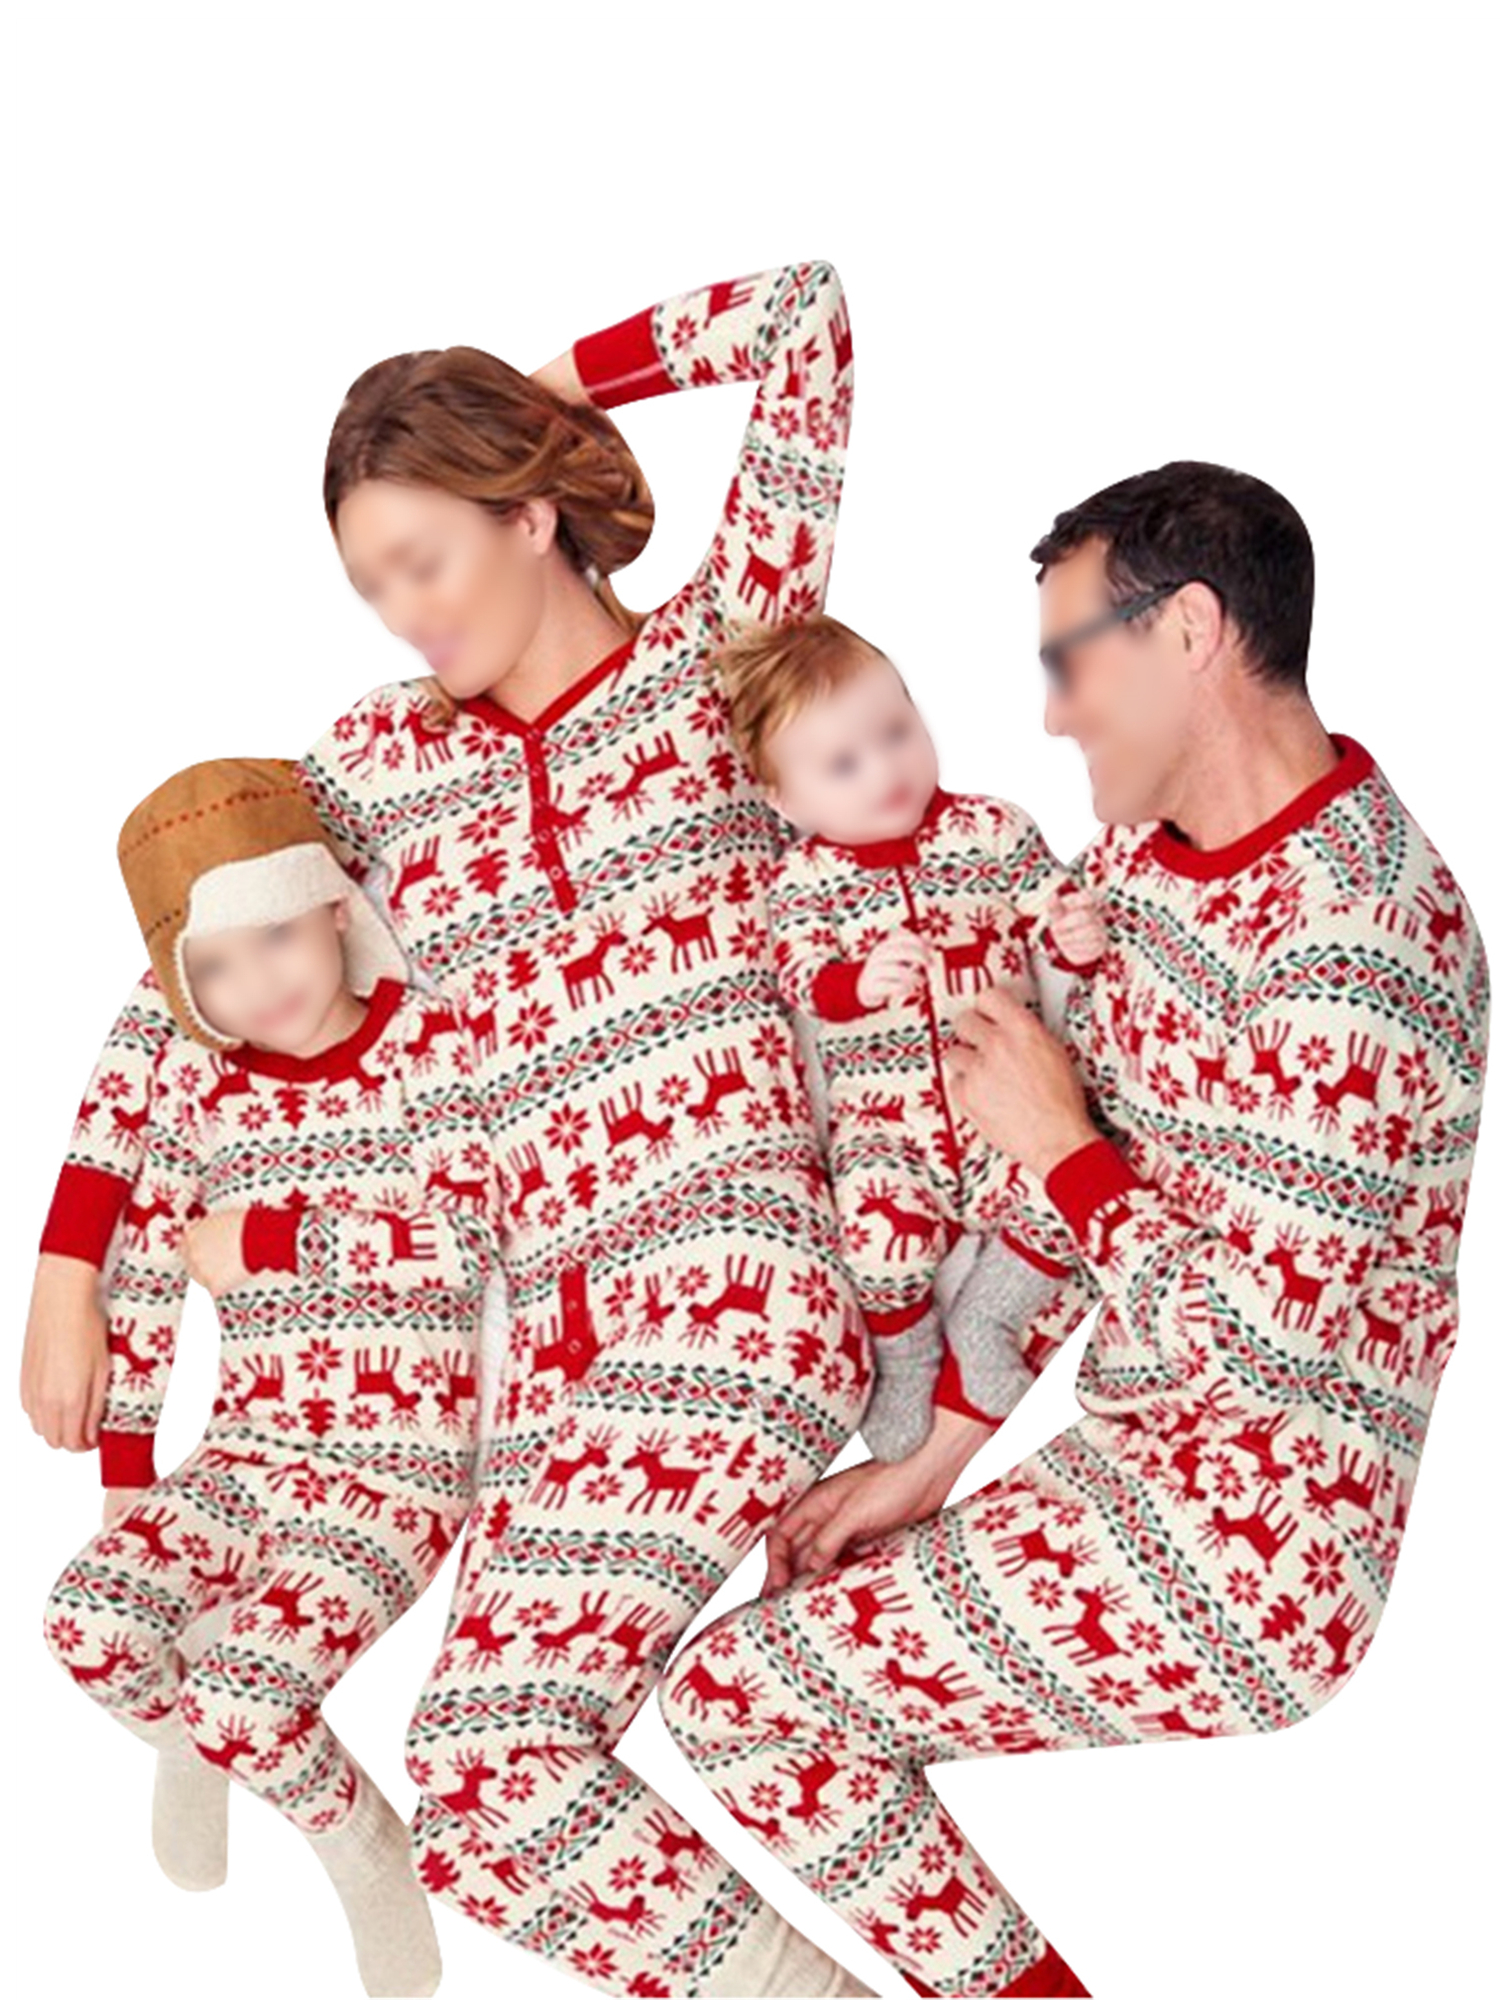 Details about  / Family Christmas  Deer Pajamas Set Long Sleeve Tops+Pants Adults Kids Nightwear